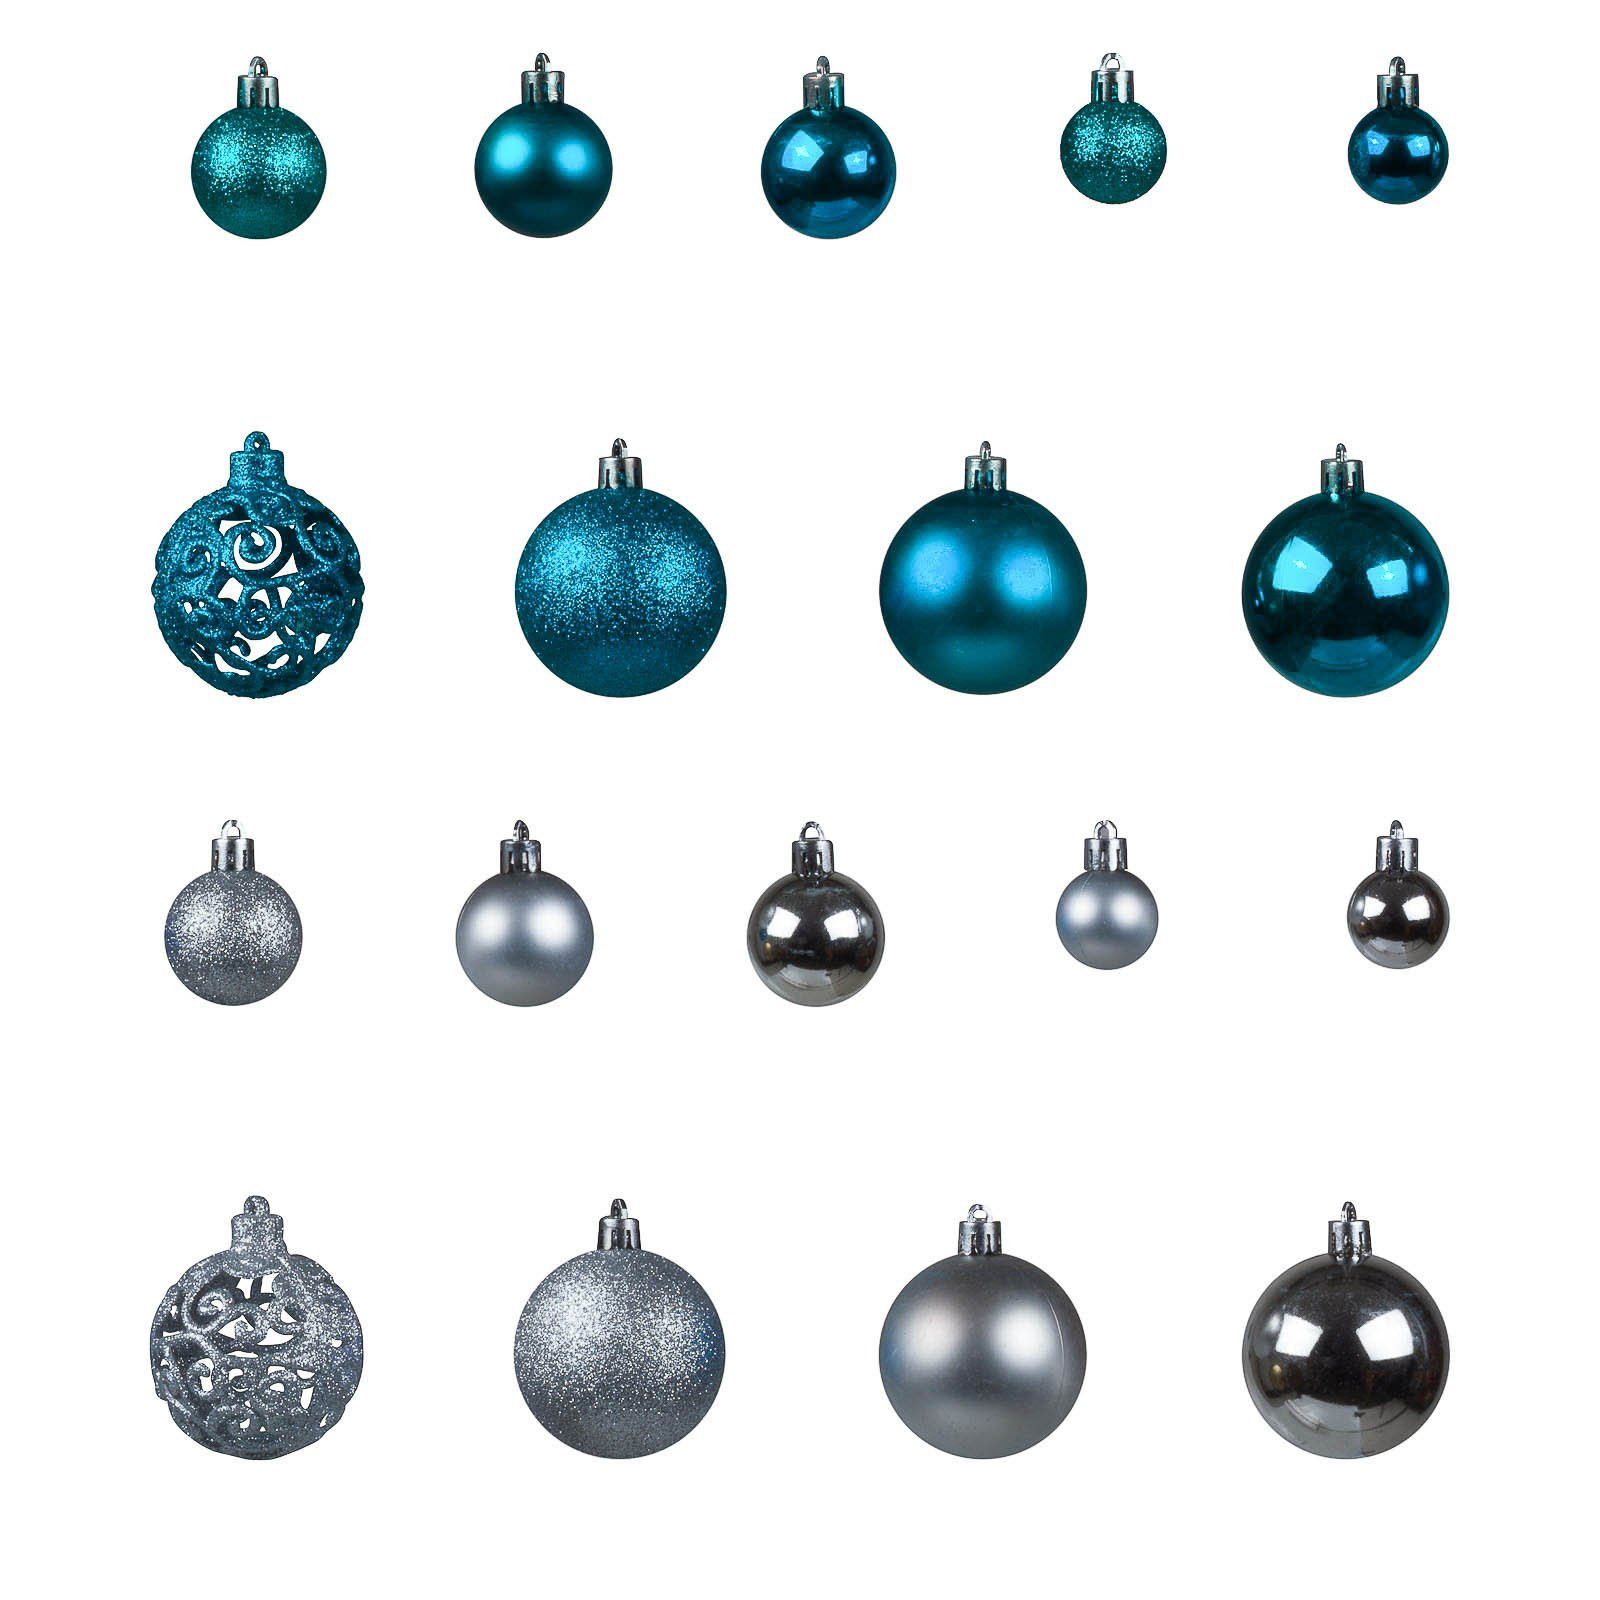 FSH Weihnachtsbaumkugel Weihnachtskugelset 100tlg (100 St) Kugeln verschiedene Christbaumschmuck Farben Aqua/Silber